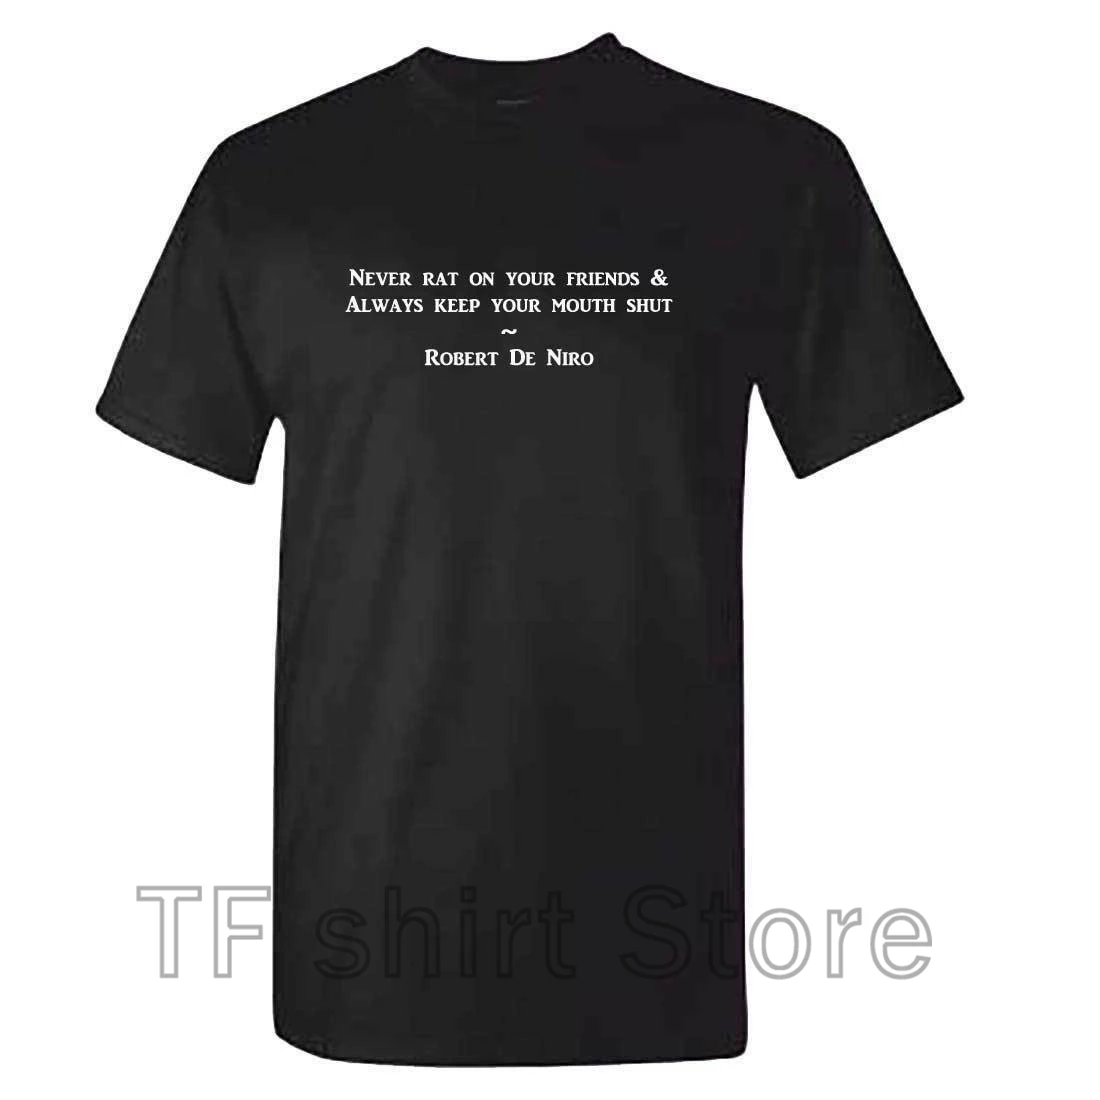 

Funny Print Men T shirt Women cool tshirt Mens NEVER RAT ON YOUR FRIENDS T-shirt - Goodfellas Inspired Ganster Mob Top